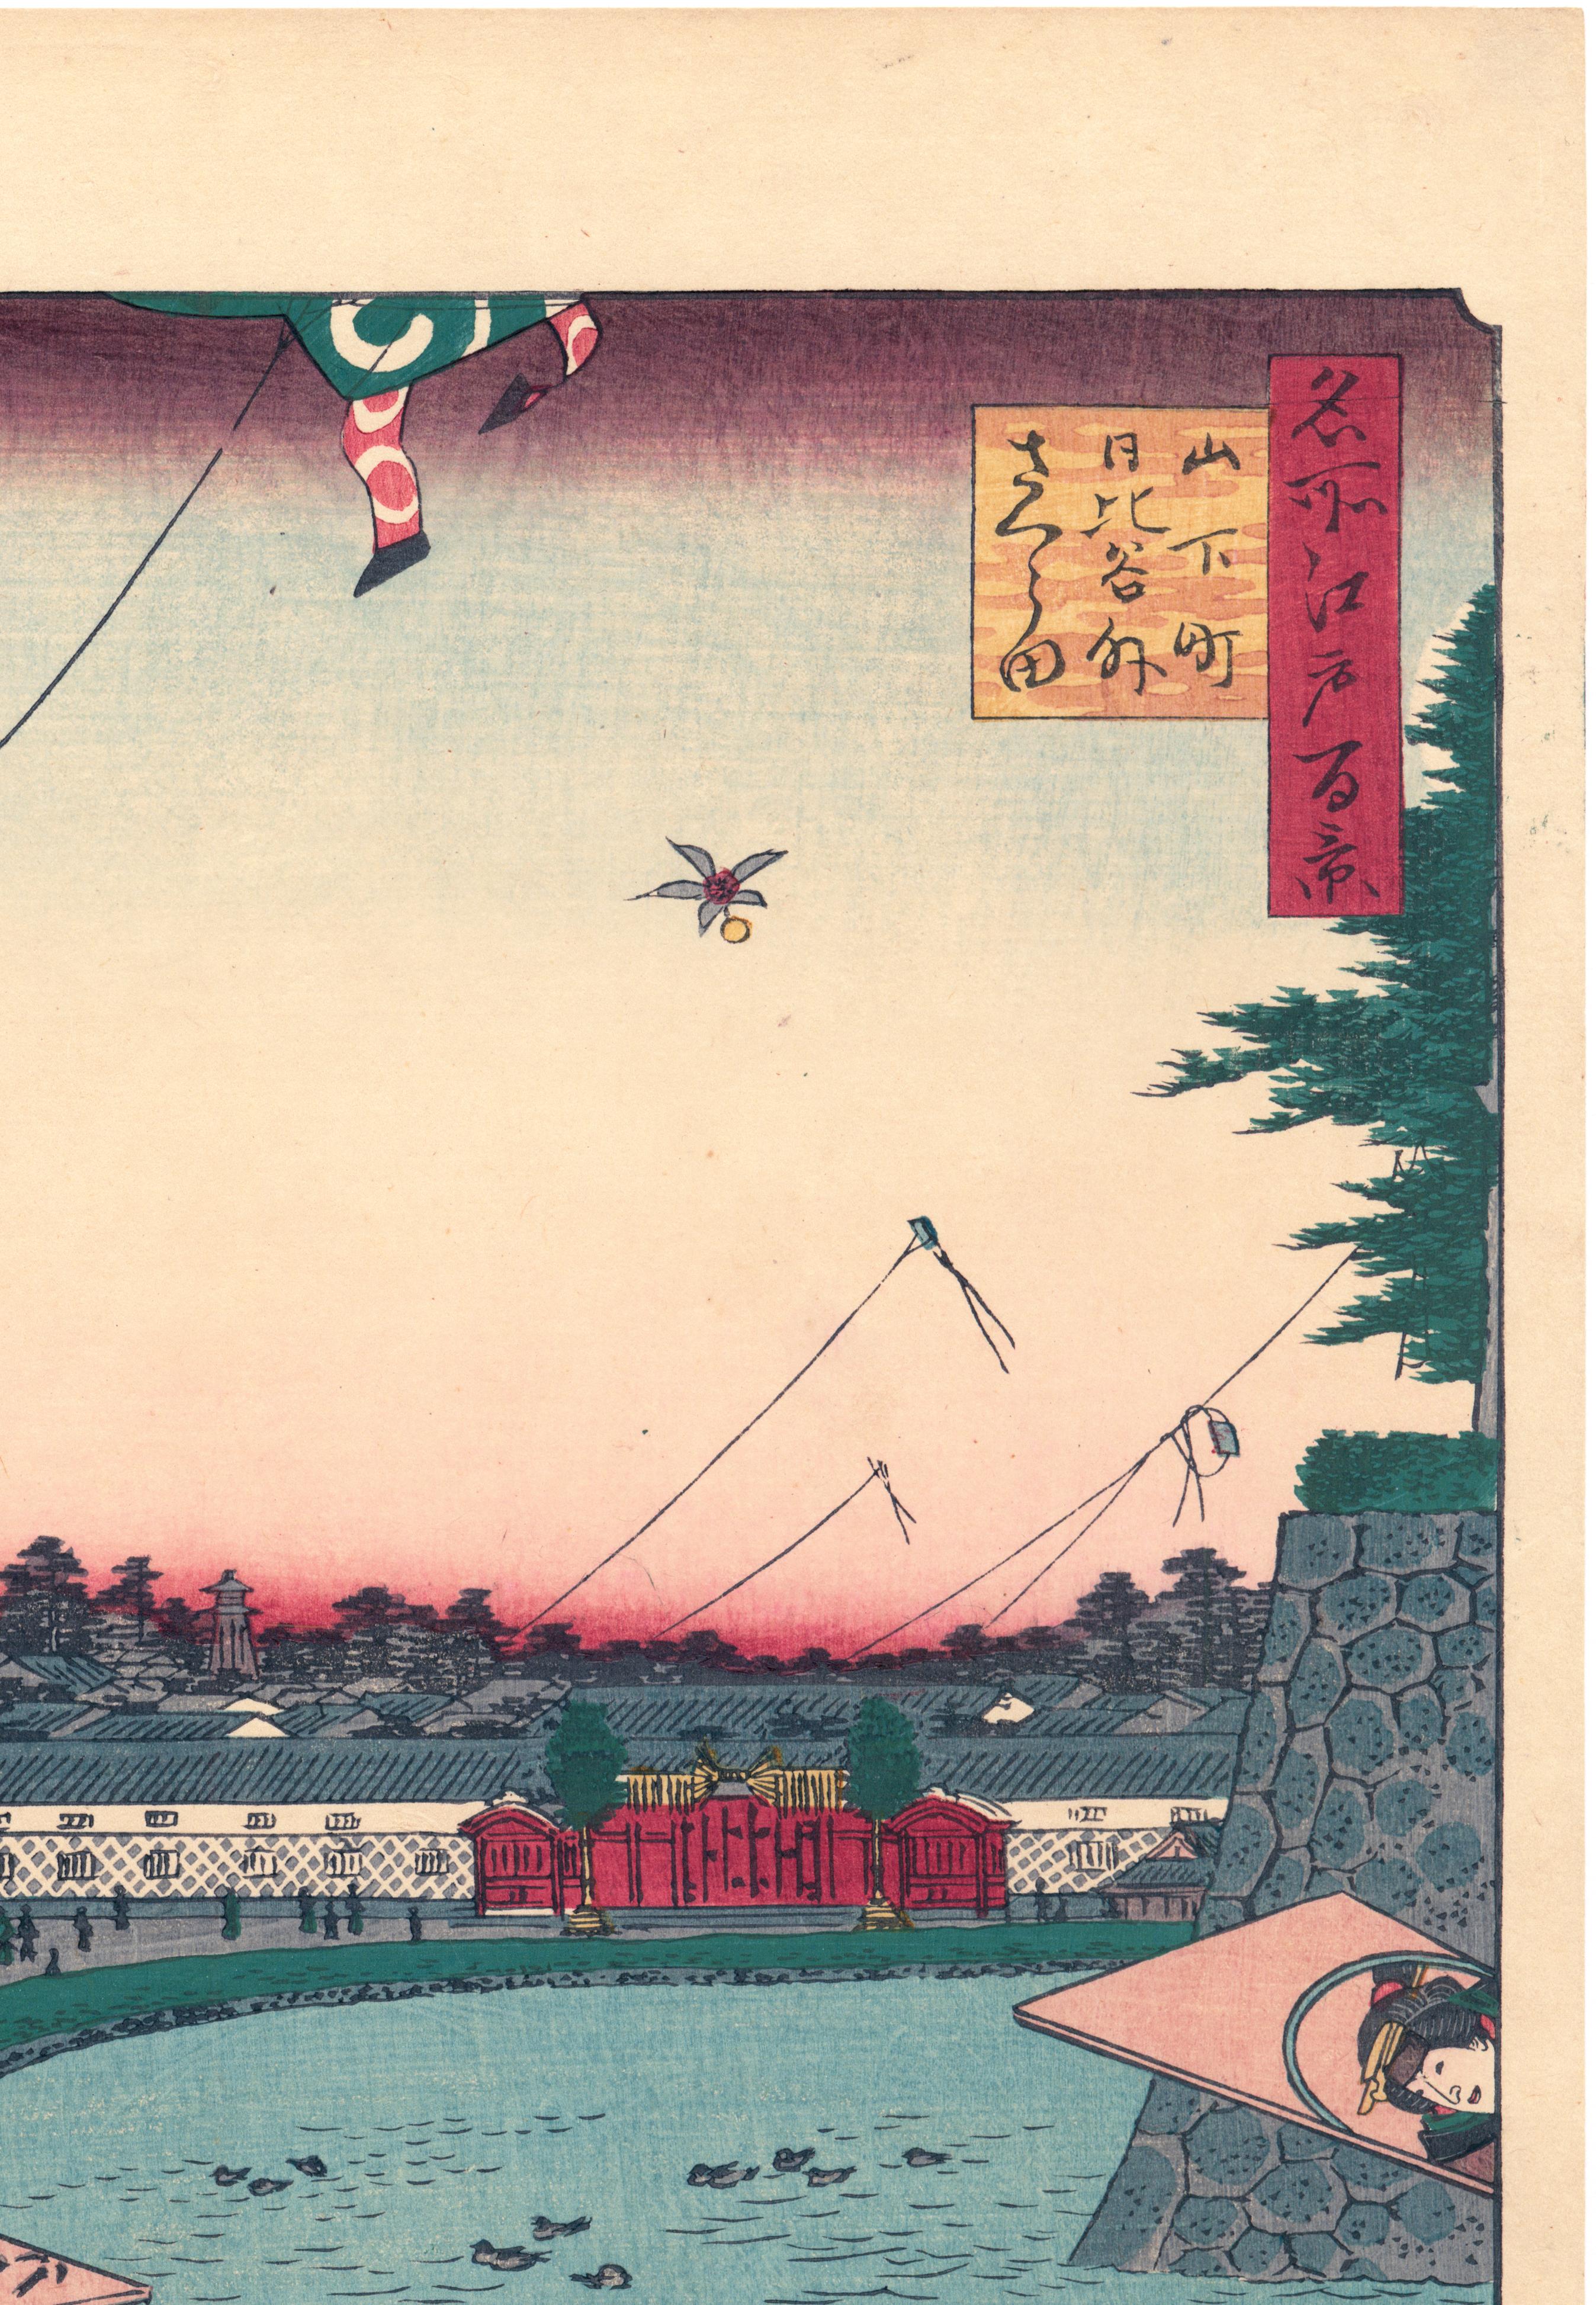 Hibiya and Soto-Sakurada from Yamashita-chô from 100 Views of Edo - Print by Utagawa Hiroshige (Ando Hiroshige)